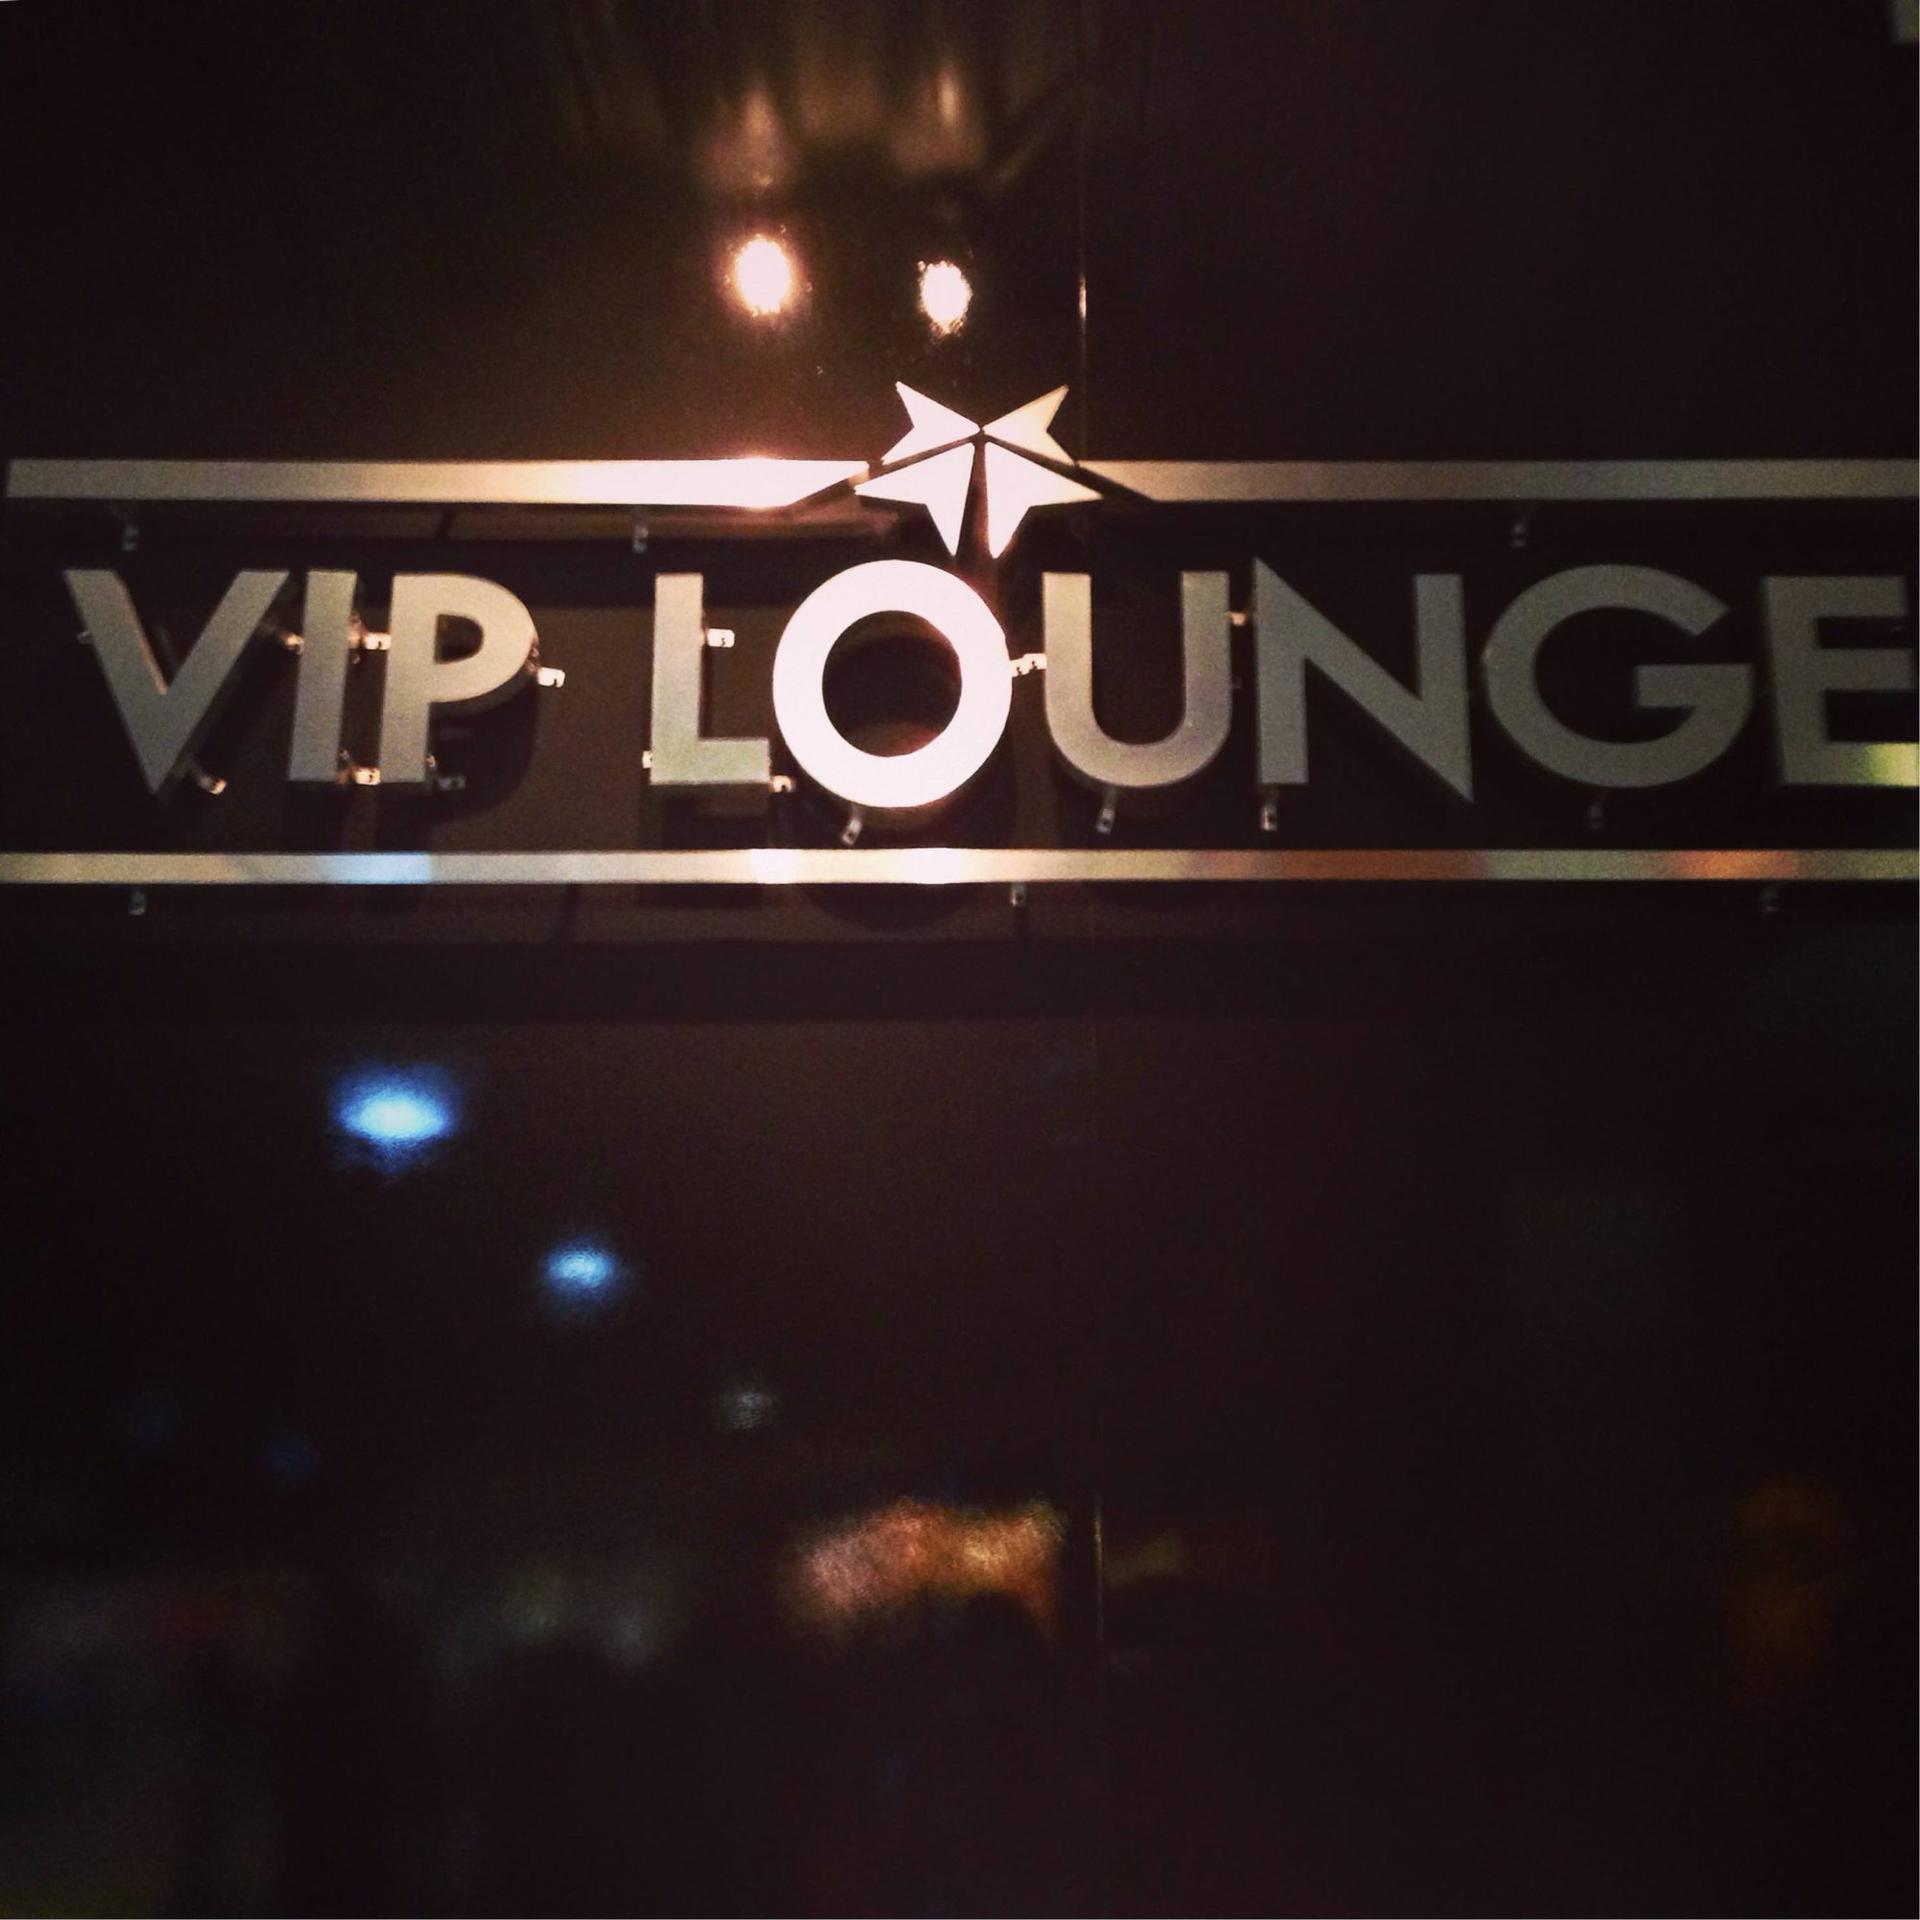 VIP Lounge image 17 of 29